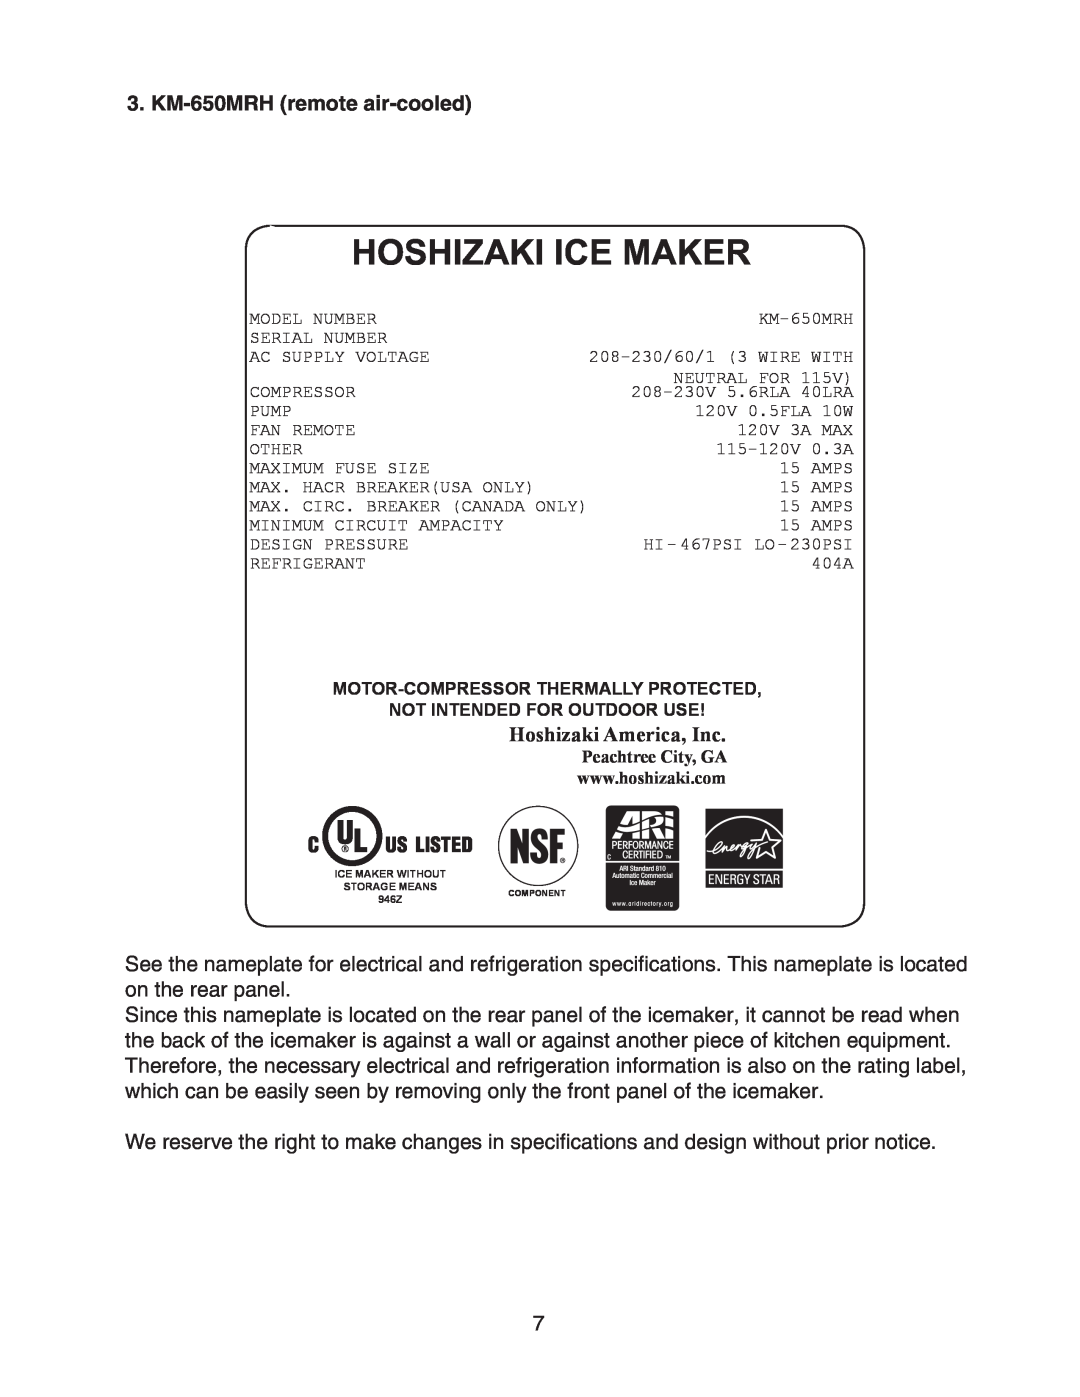 Hoshizaki KM-650MAH instruction manual KM-650MRH remote air-cooled, Hoshizaki Ice Maker, Hoshizaki America, Inc 